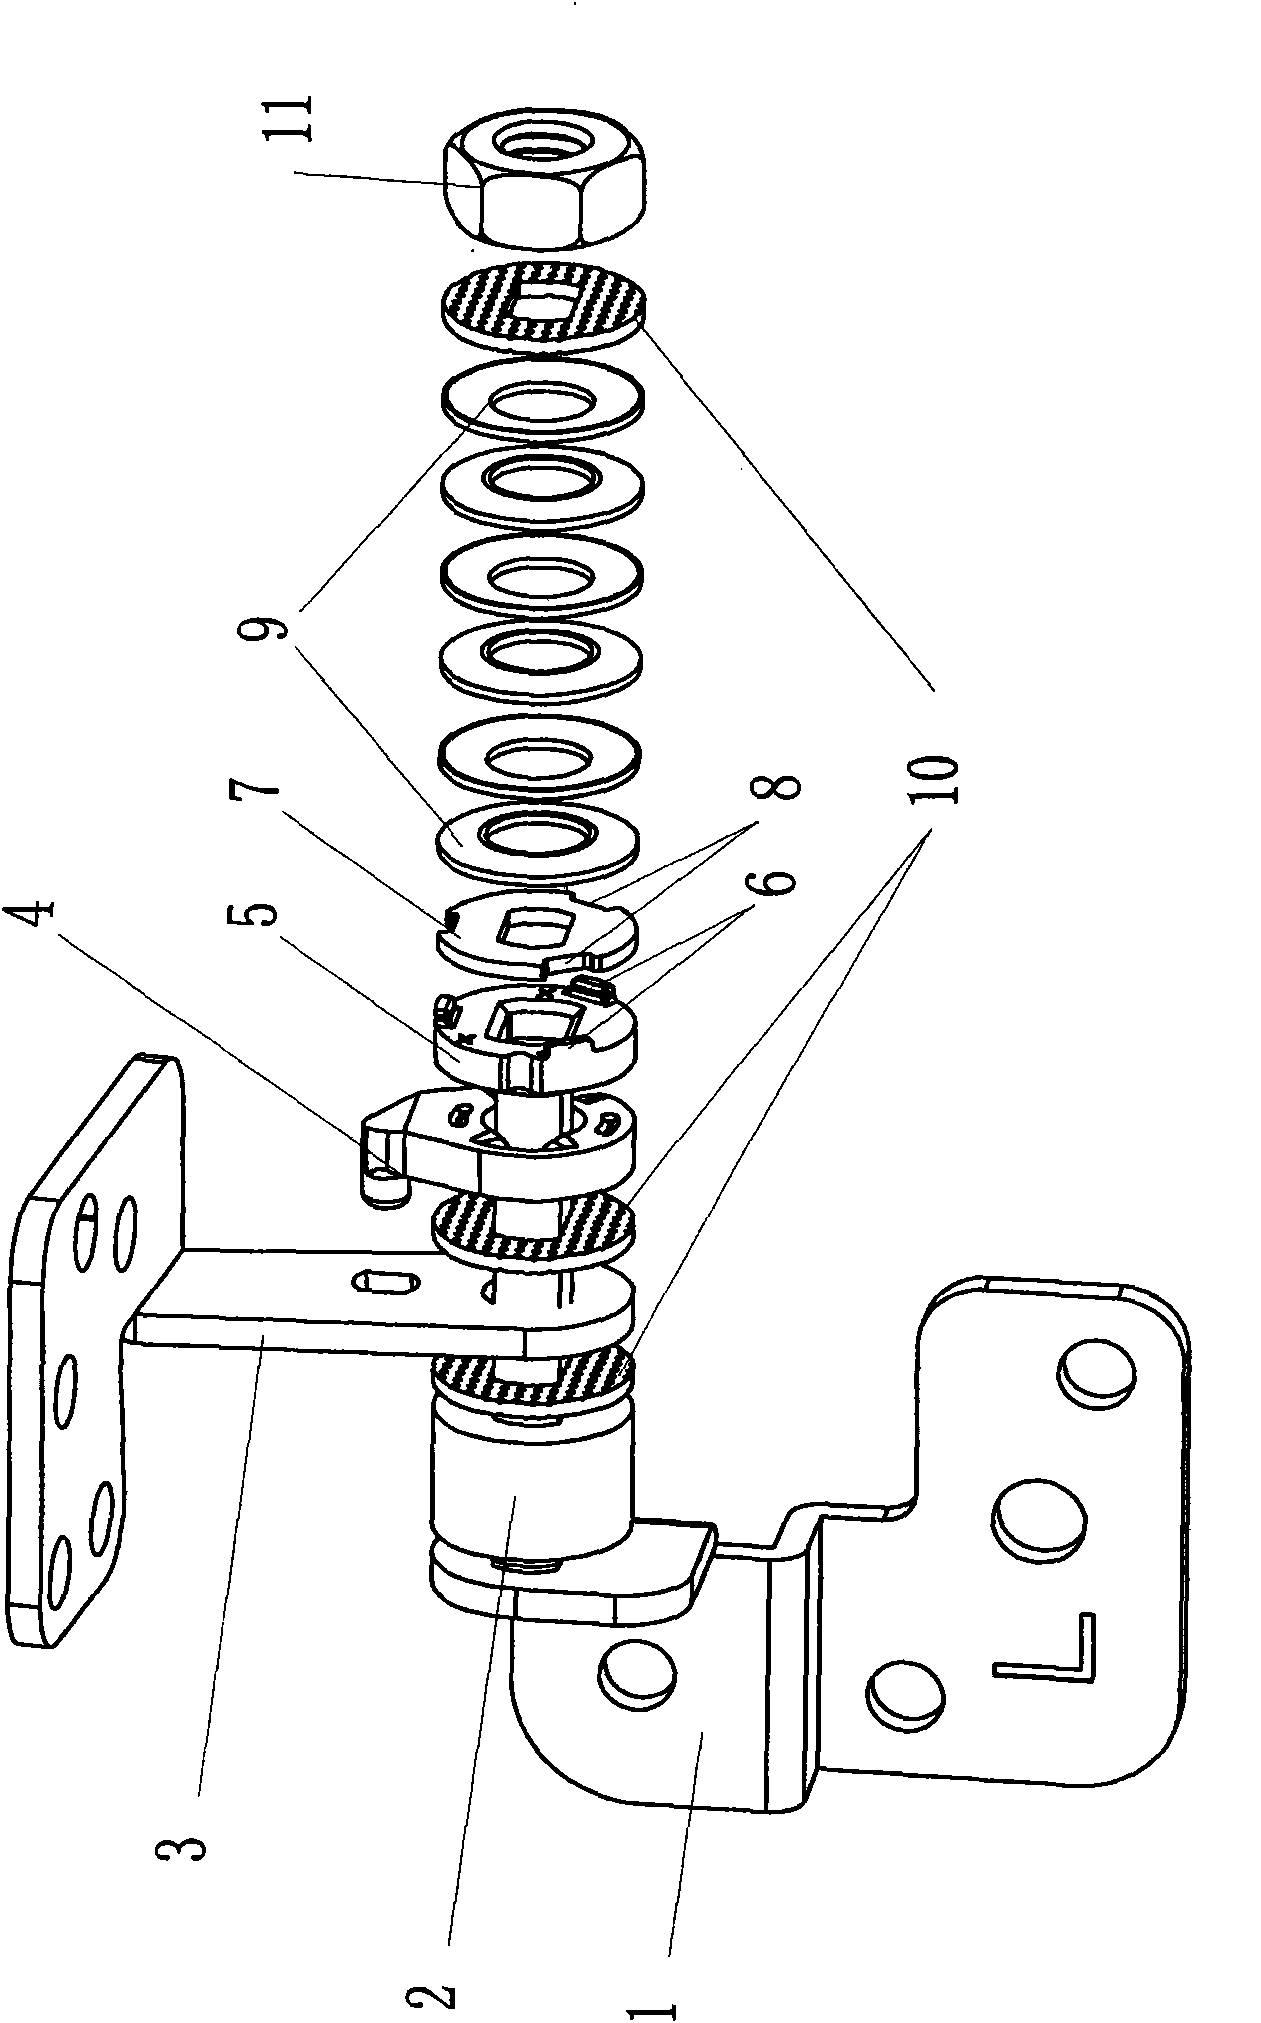 Revolving shaft with muffling cam